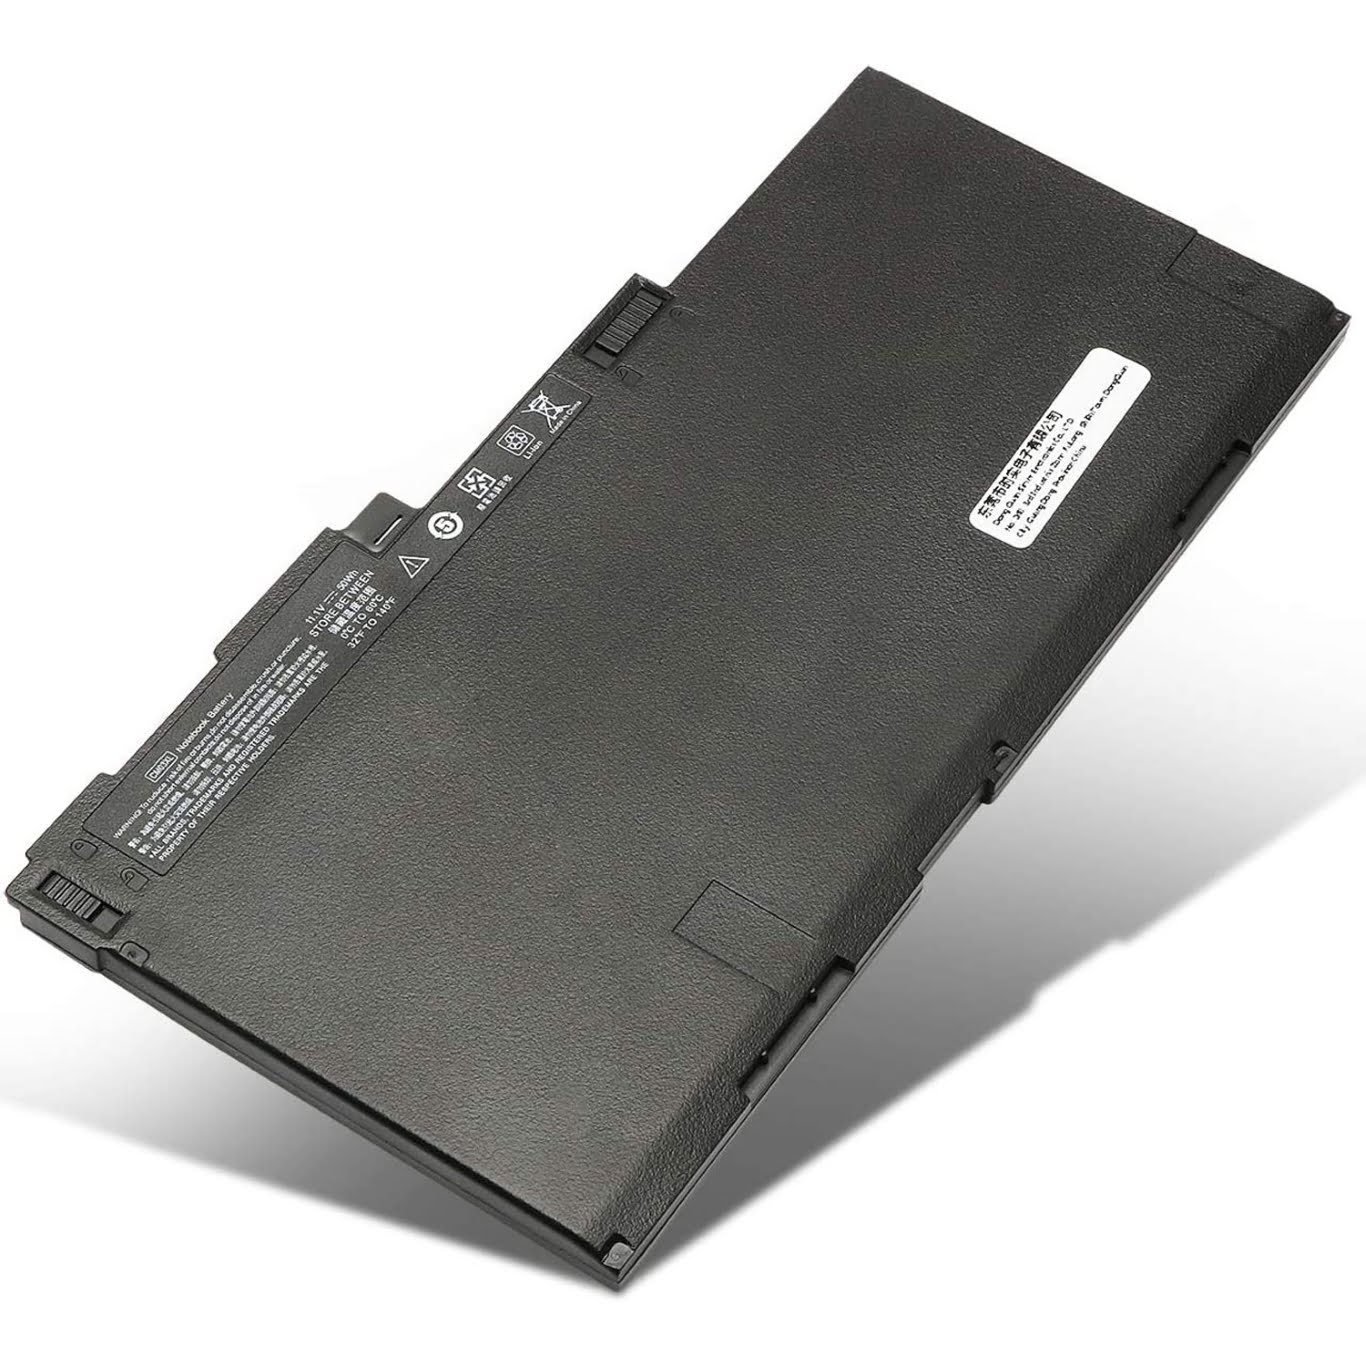 Hp Hstnn-ib4r, 716723-271 Laptop Akku Fuer Elitebook 740 G1 Series, Elitebook 750 G1 Series ersatz